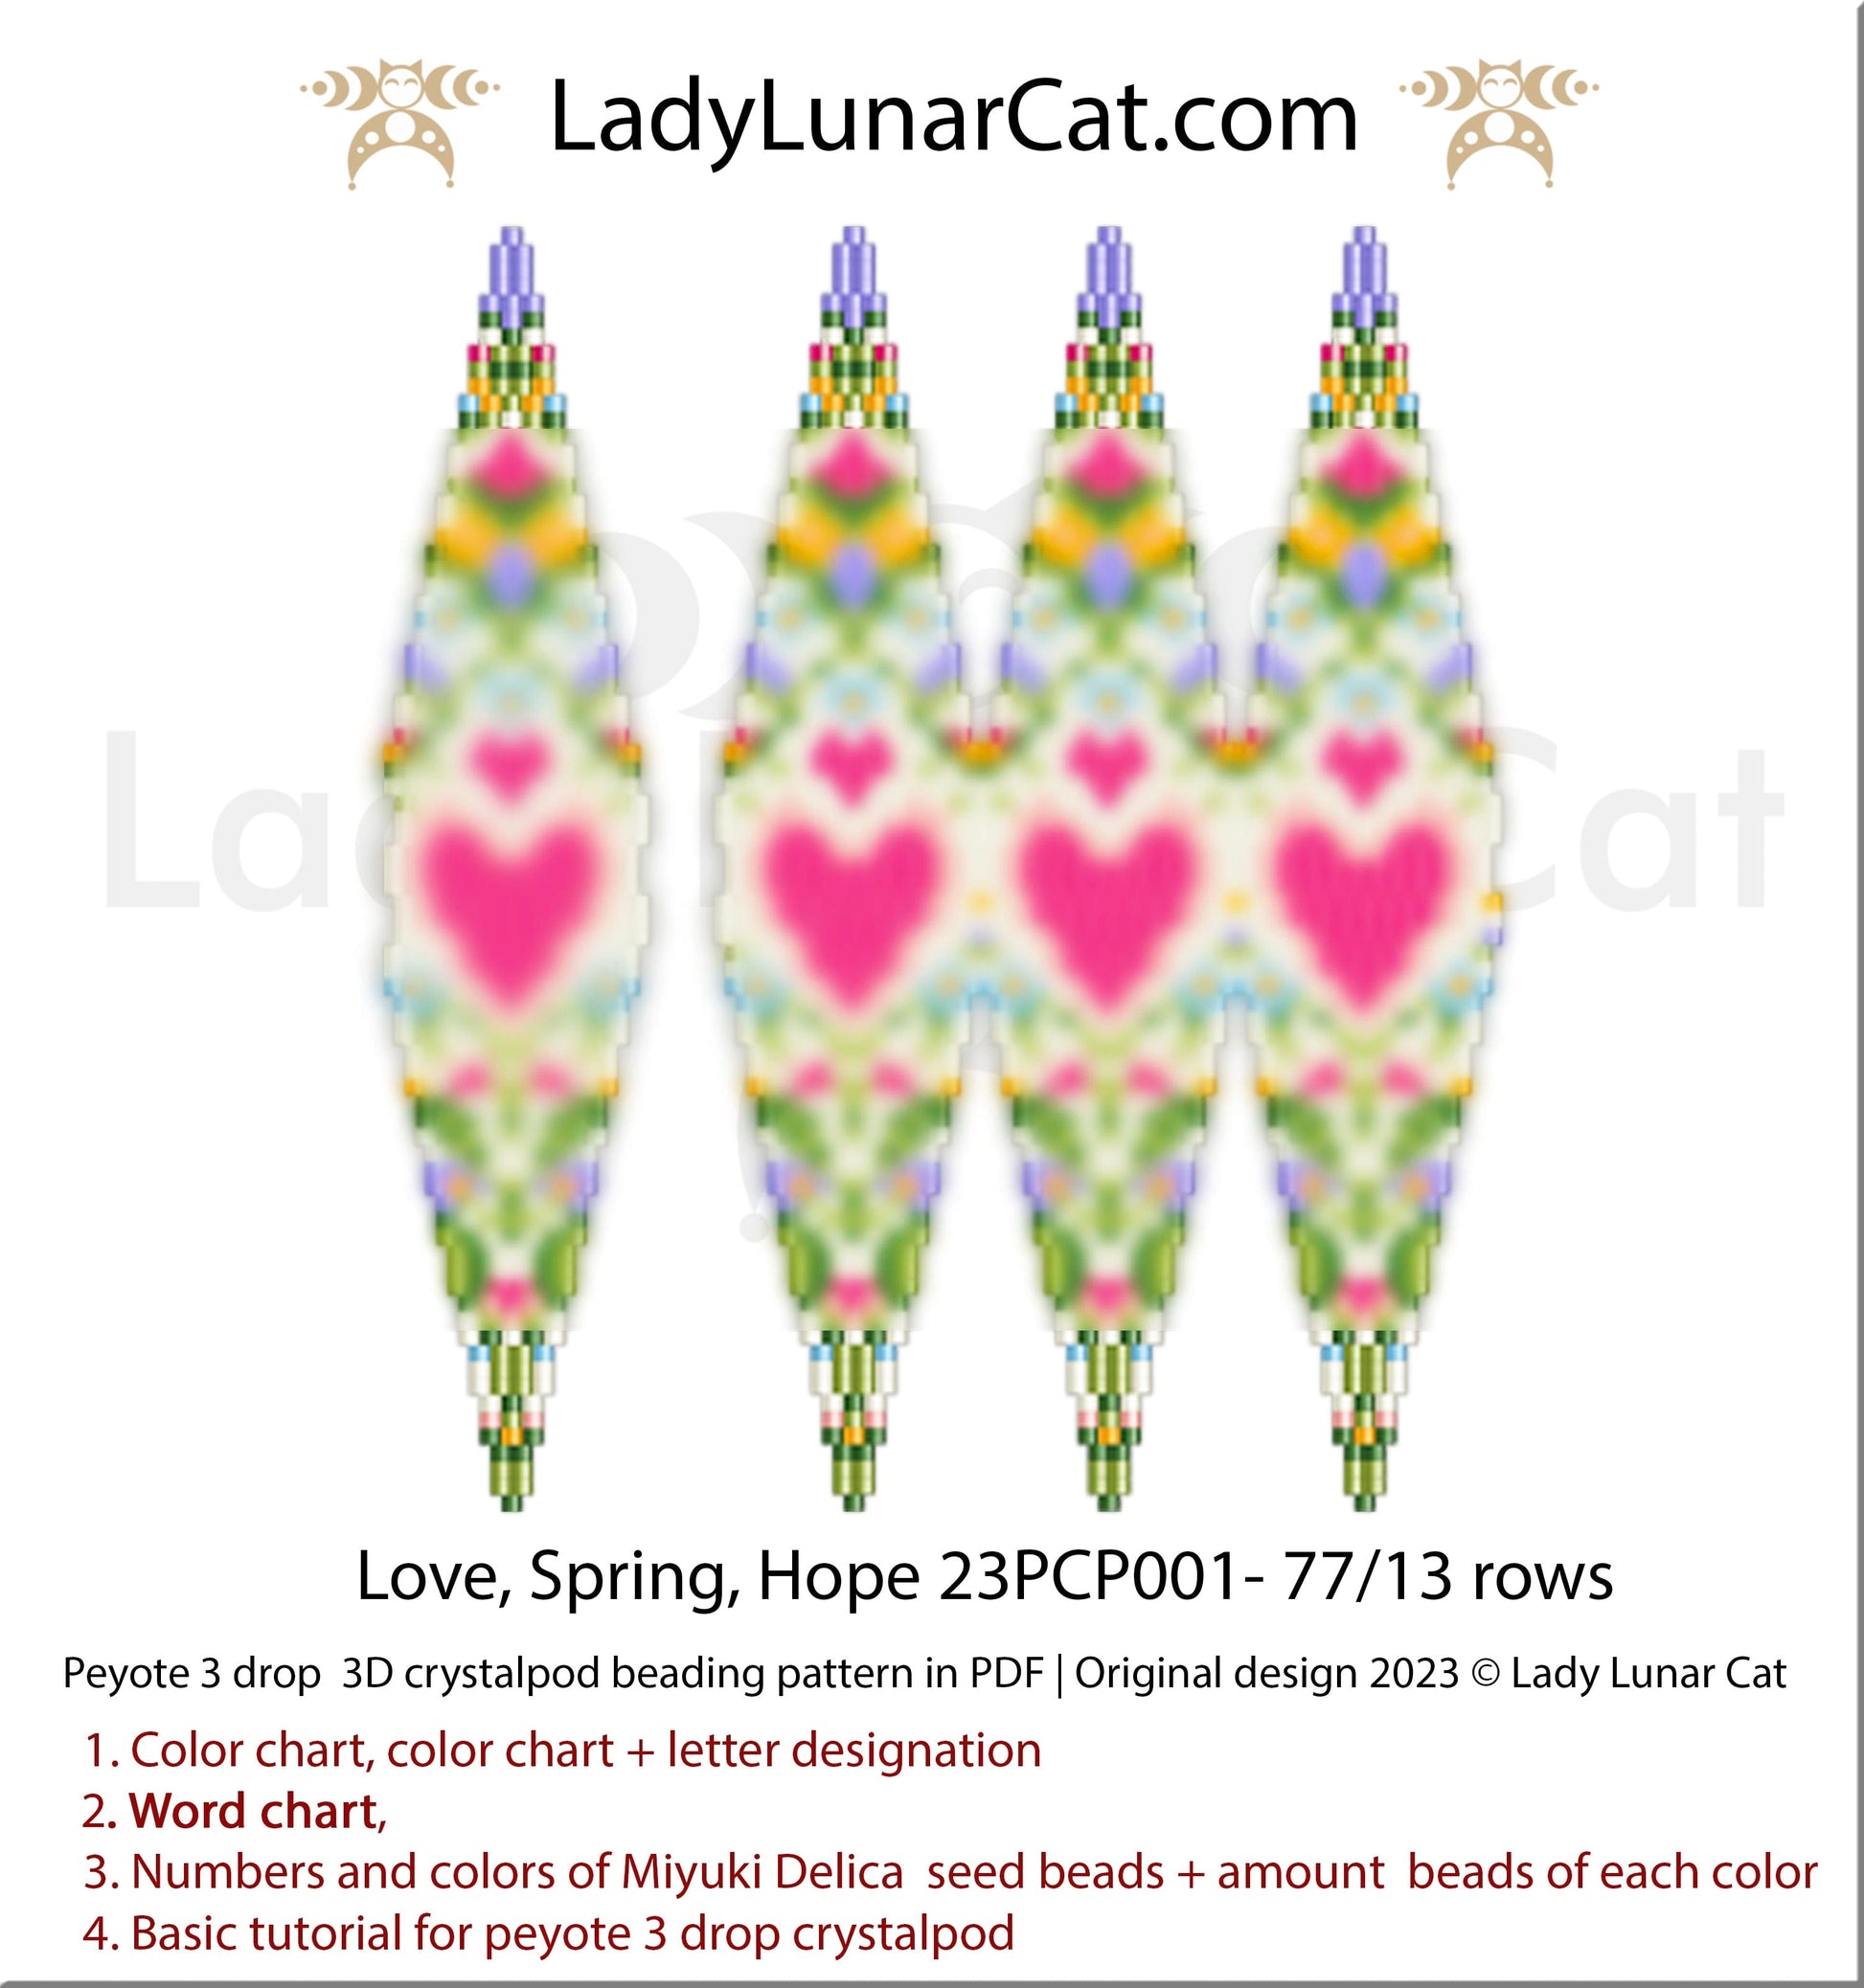 3drop pod pattern or crystalpod pattern for beading Love, Spring, Hope 23PCP001 LadyLunarCat